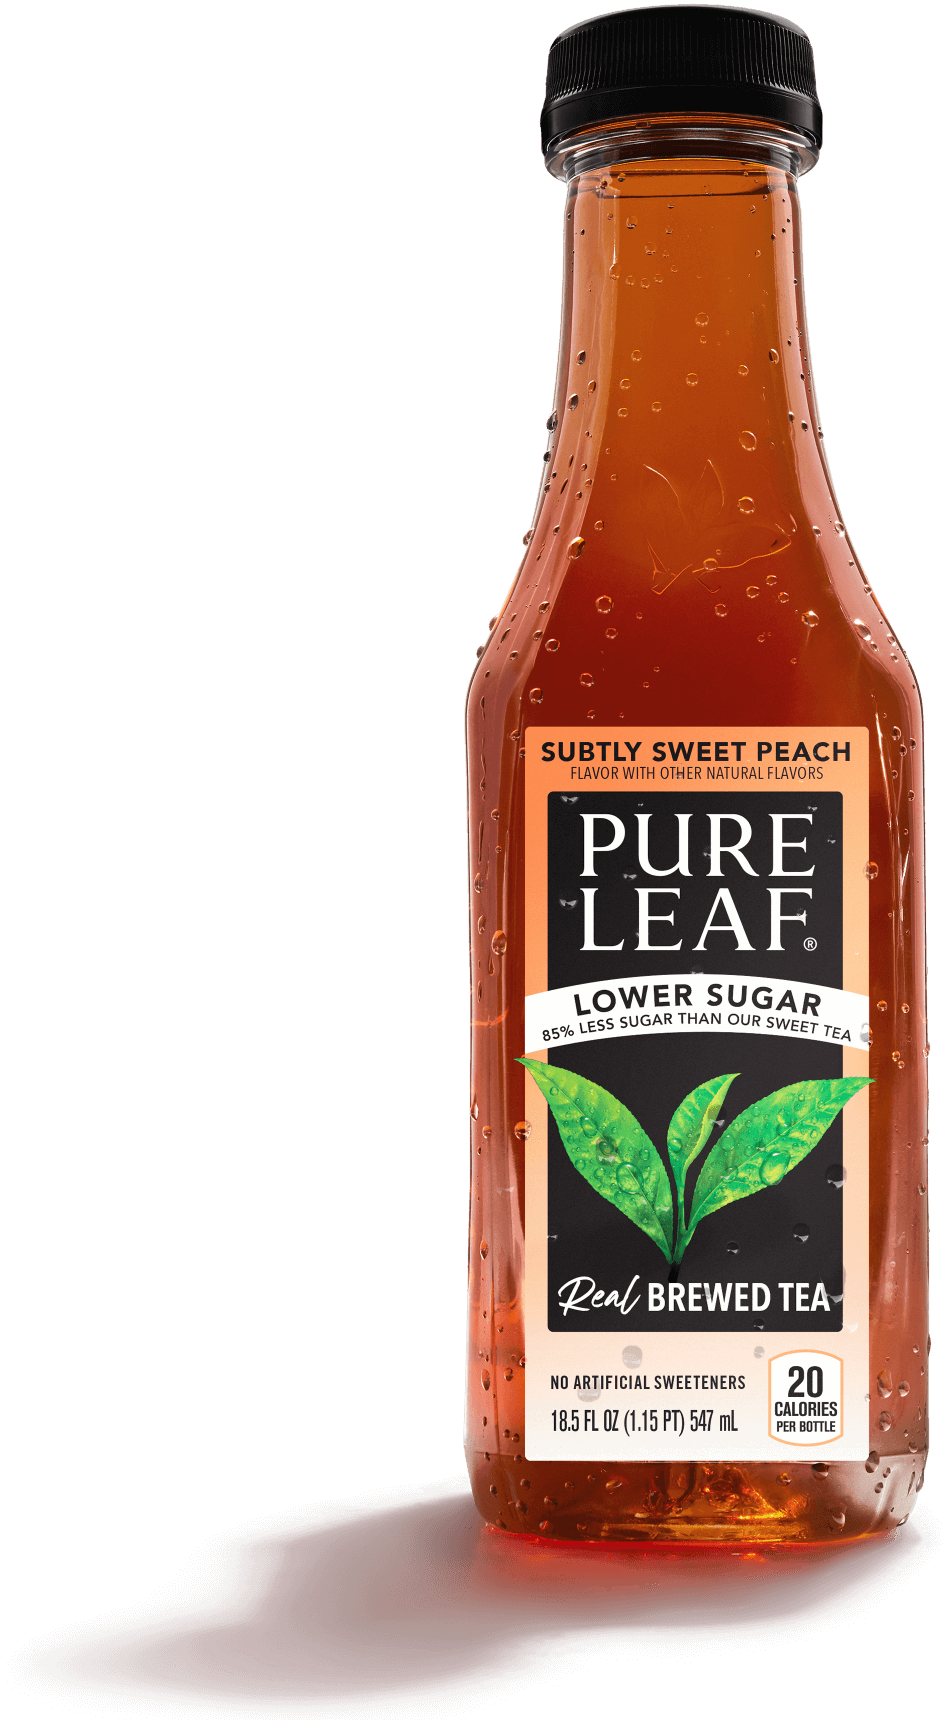 Pure Leaf Real Brewed Unsweetened Black Tea, 12 bottles / 16.9 fl oz -  Foods Co.